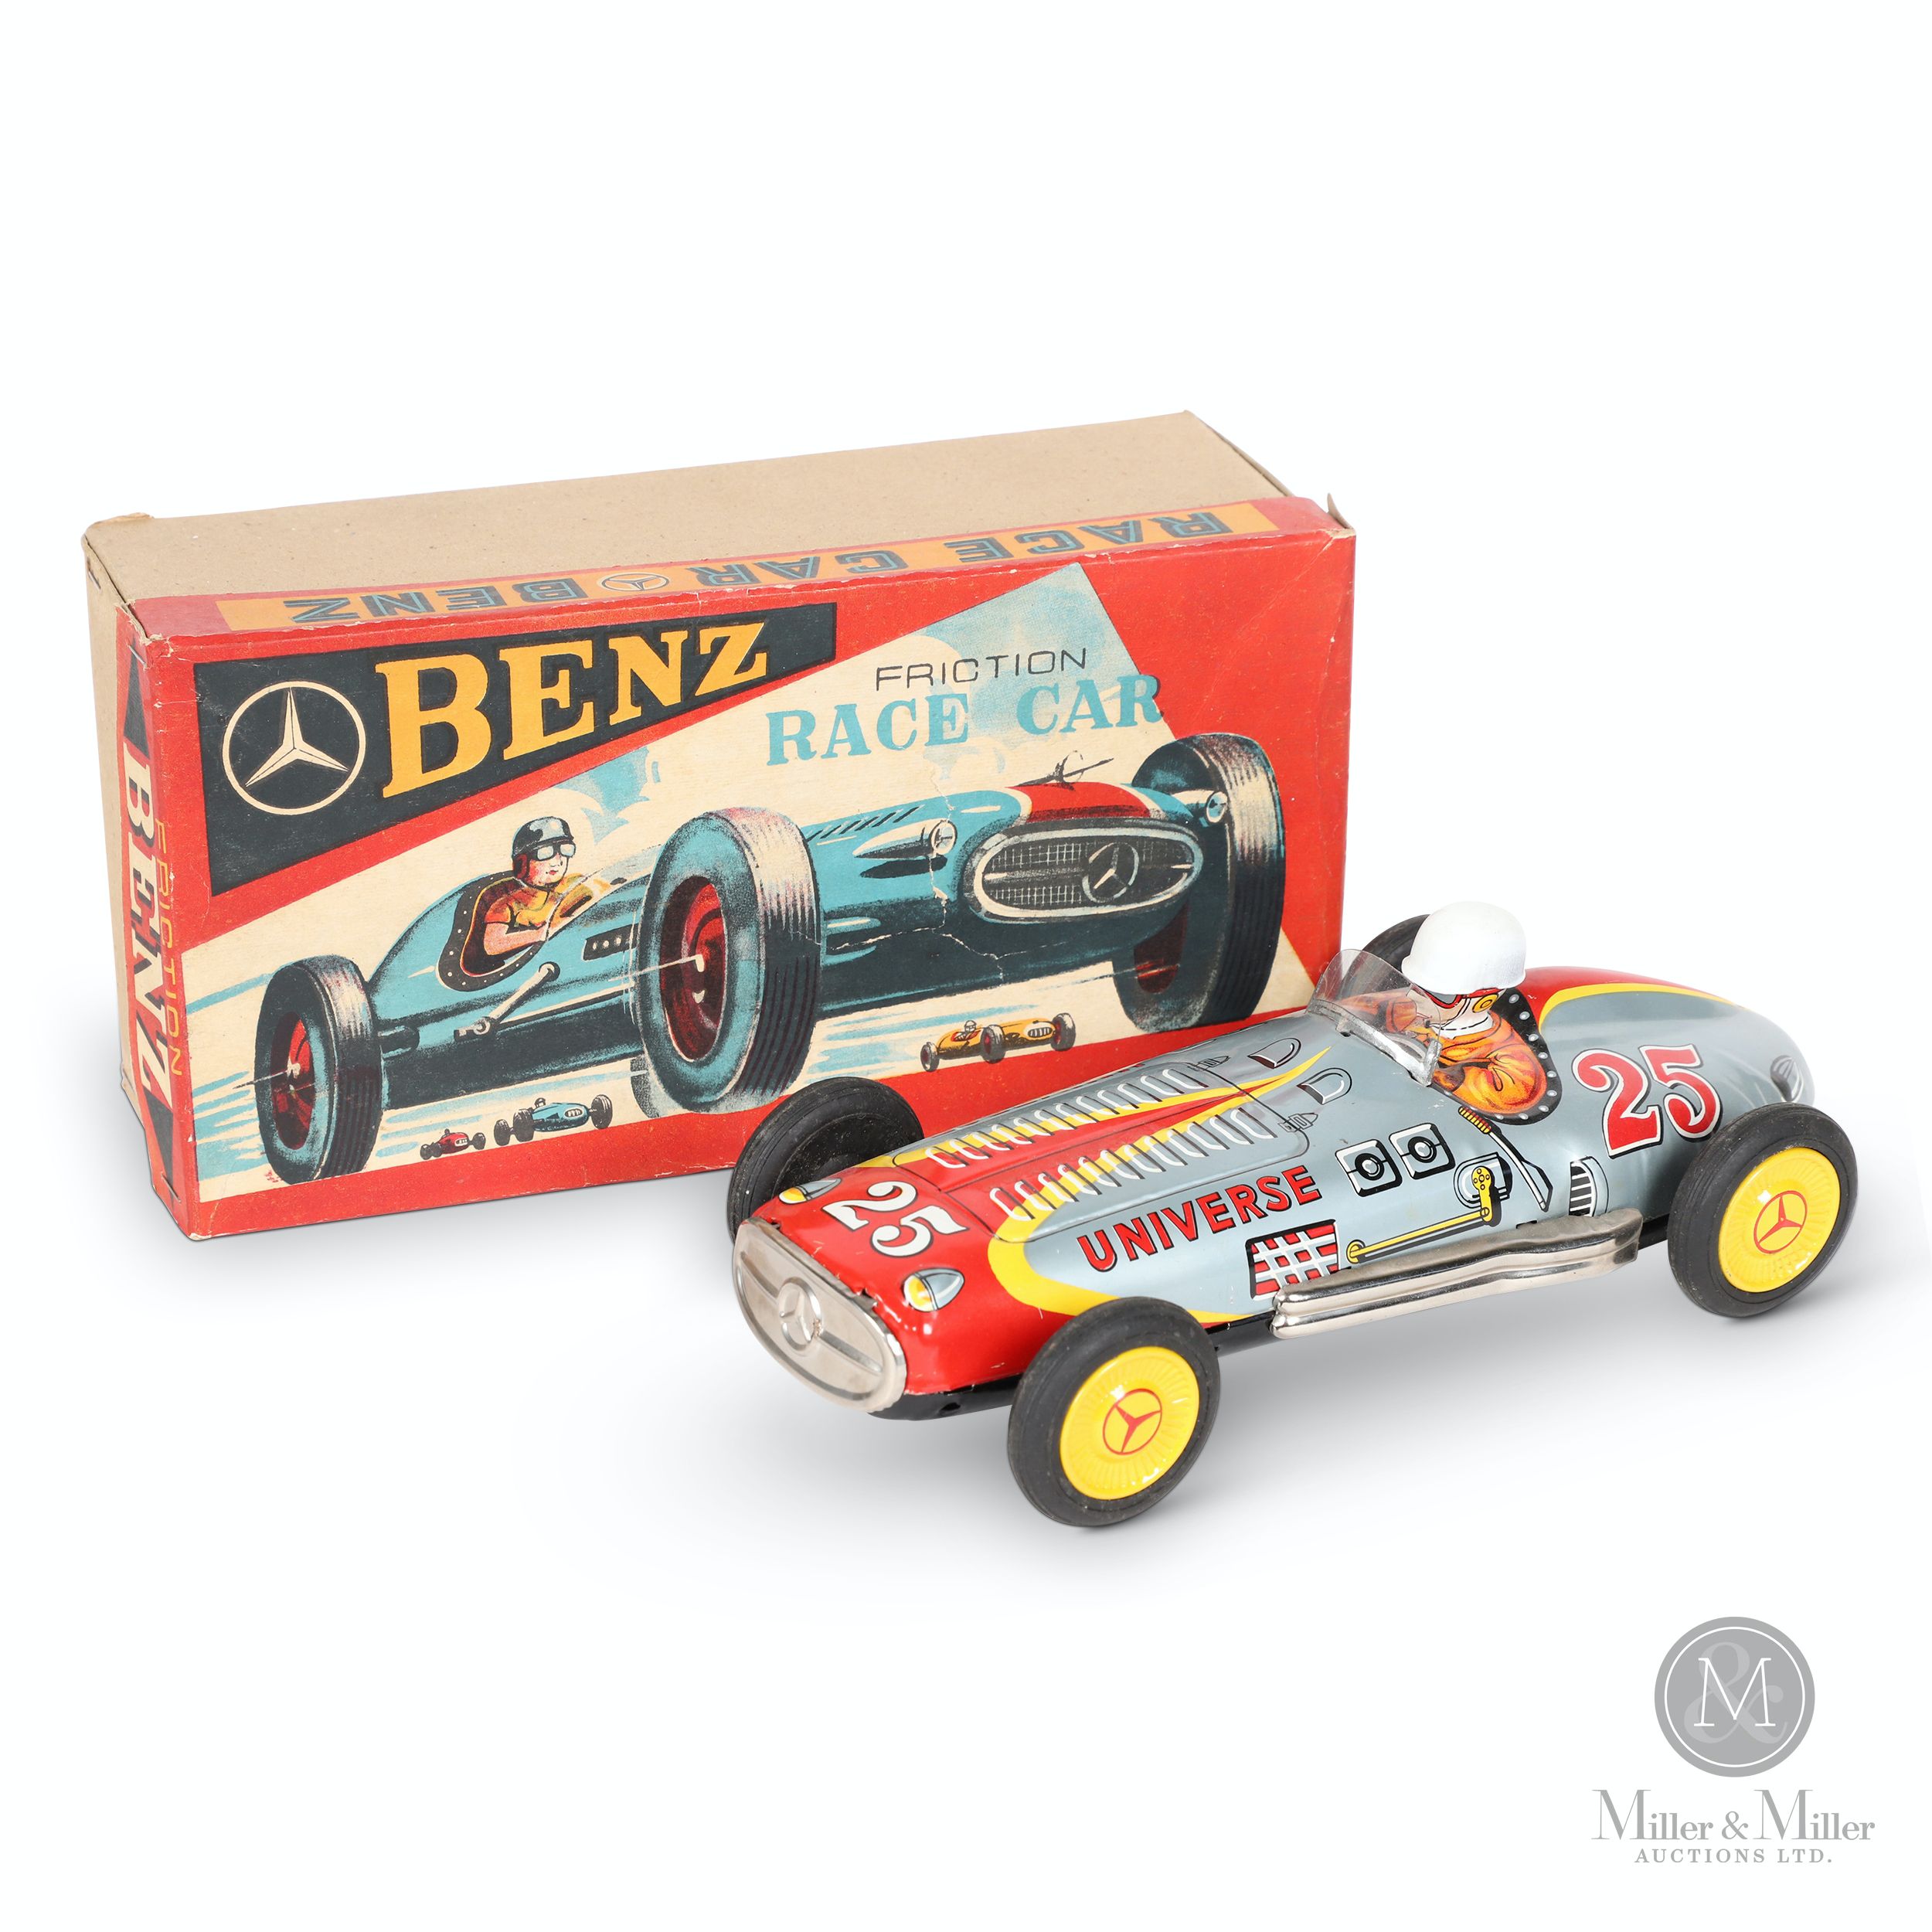 Yonezawa Mercedes Benz Friction Race Car Toy | Miller & Miller